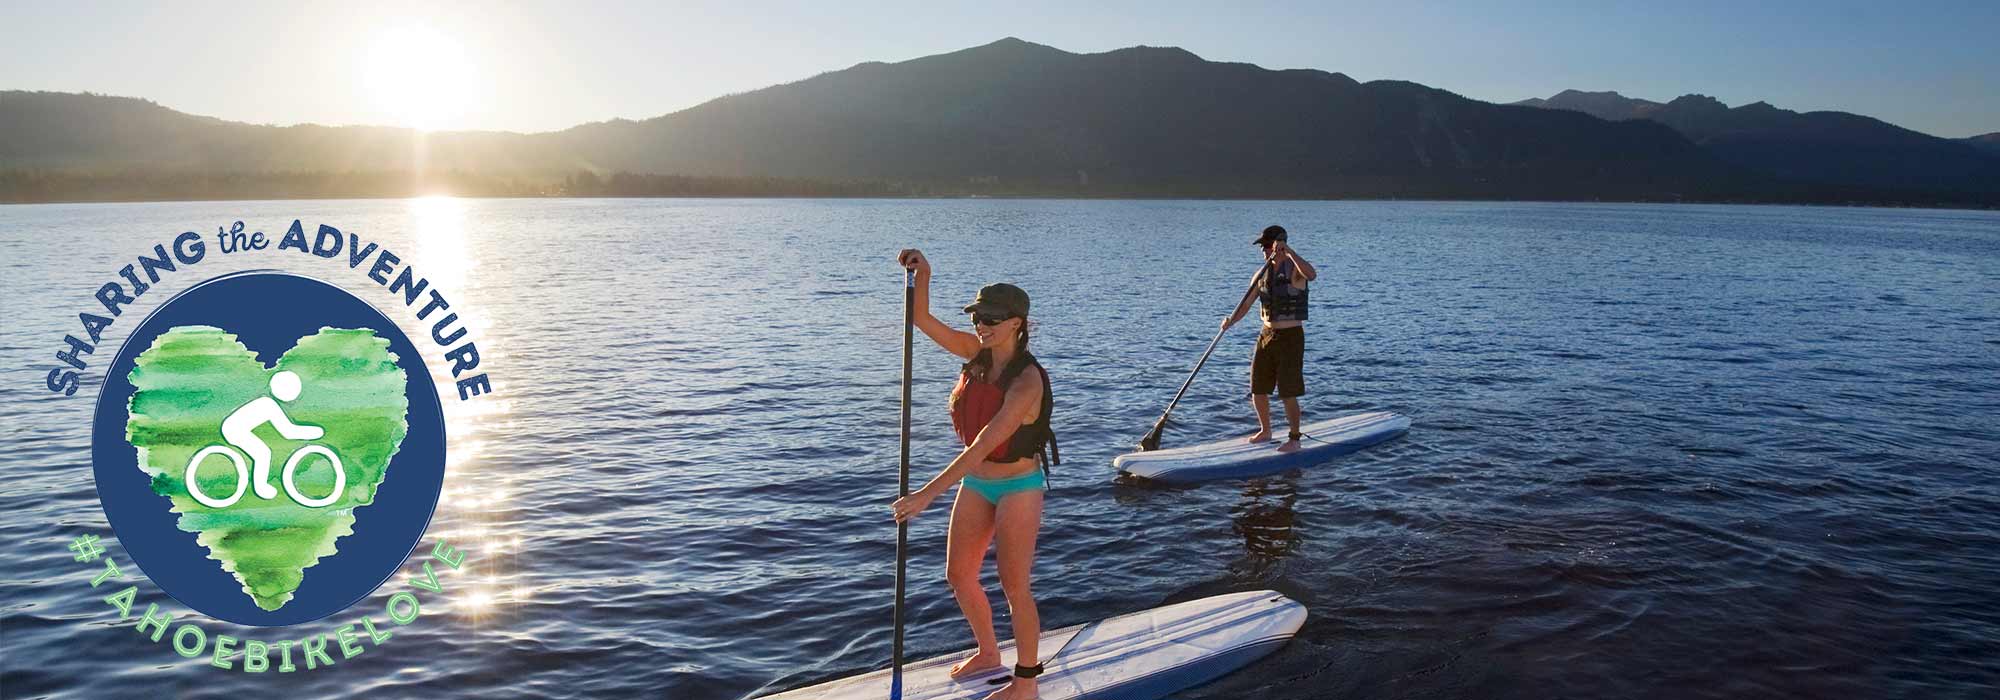 Tahoe Bike Love Activities Paddle Boarding